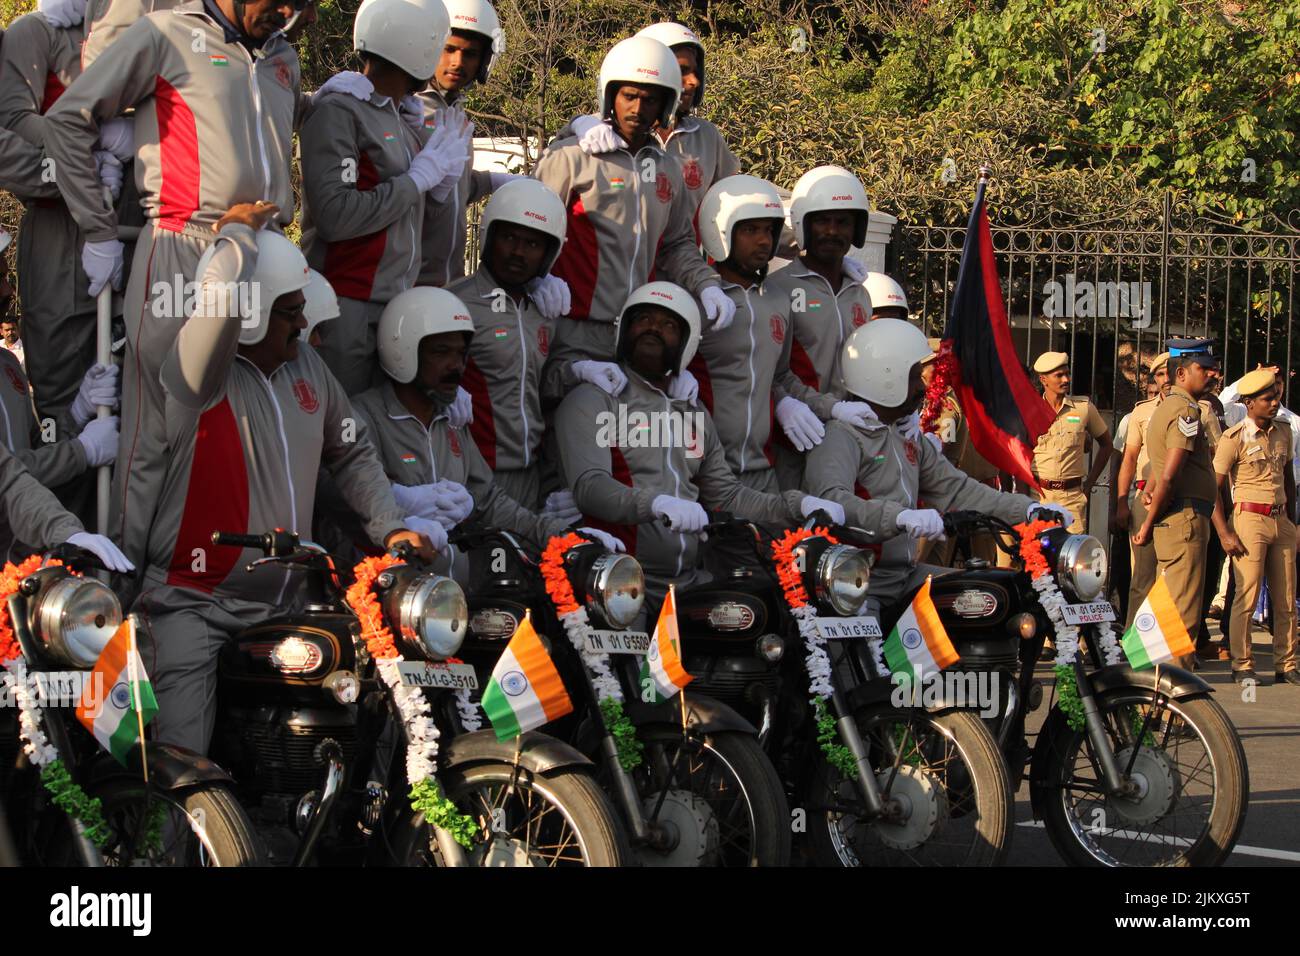 Chennai, Tamilnadu / India - January 01 2020 : Indian military or army men showing their bike riding skills at motorbike rally on bikes, India's repub Stock Photo